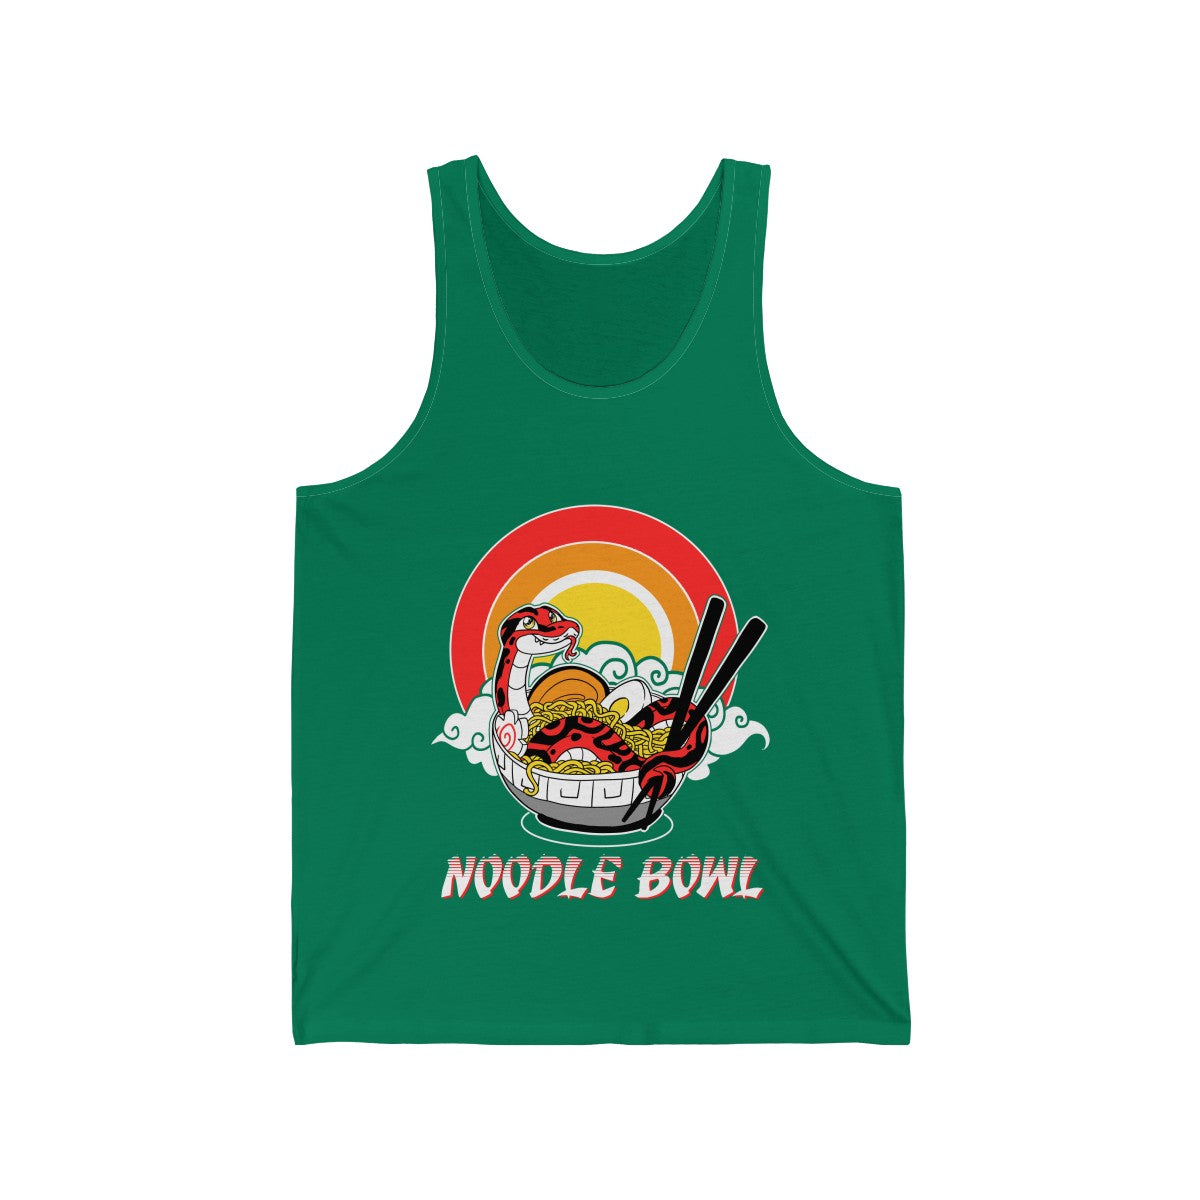 Noodle Bowl - Tank Top Tank Top Crunchy Crowe Green XS 